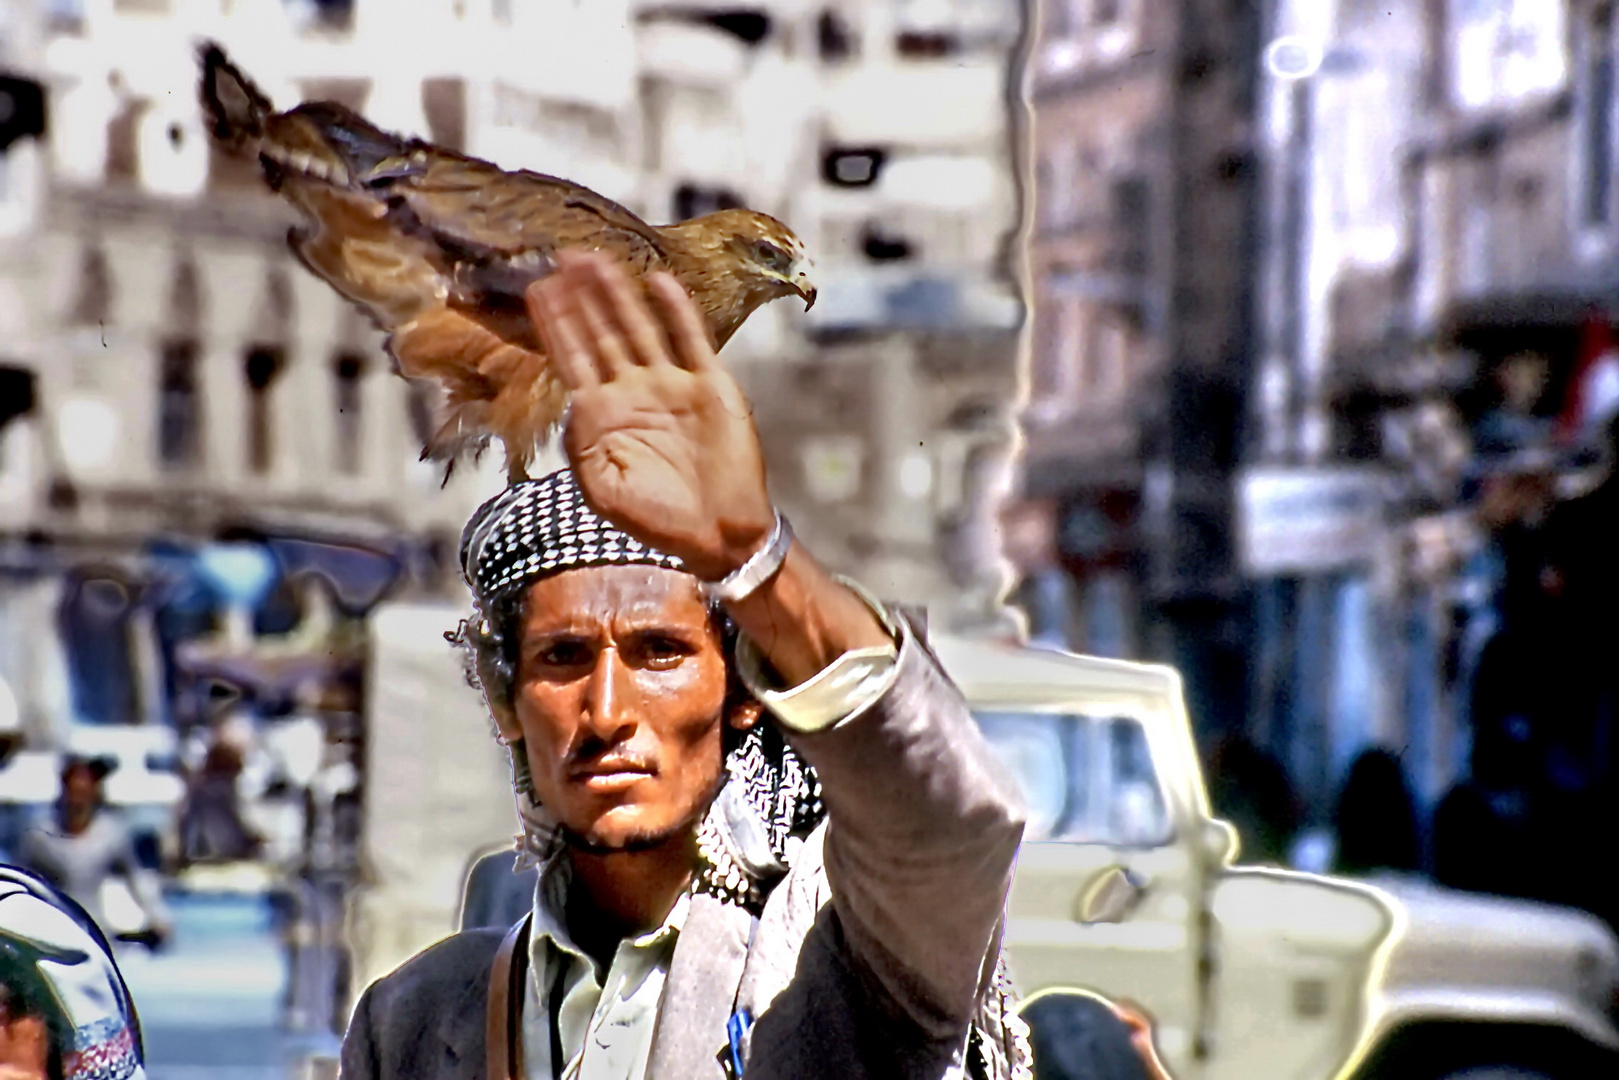 Yemenitischer Falkner